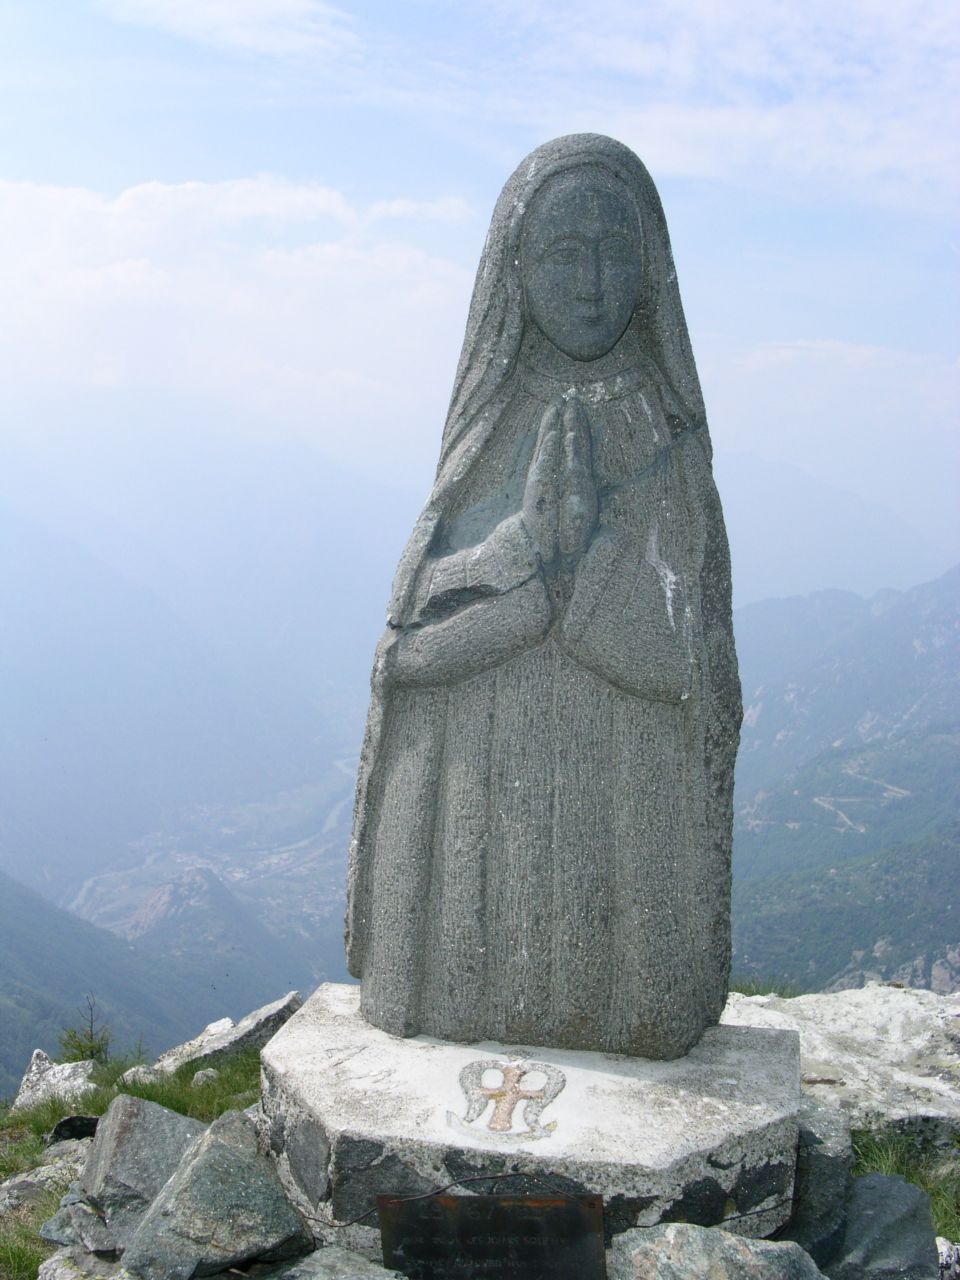 The Madonna statue on the peak